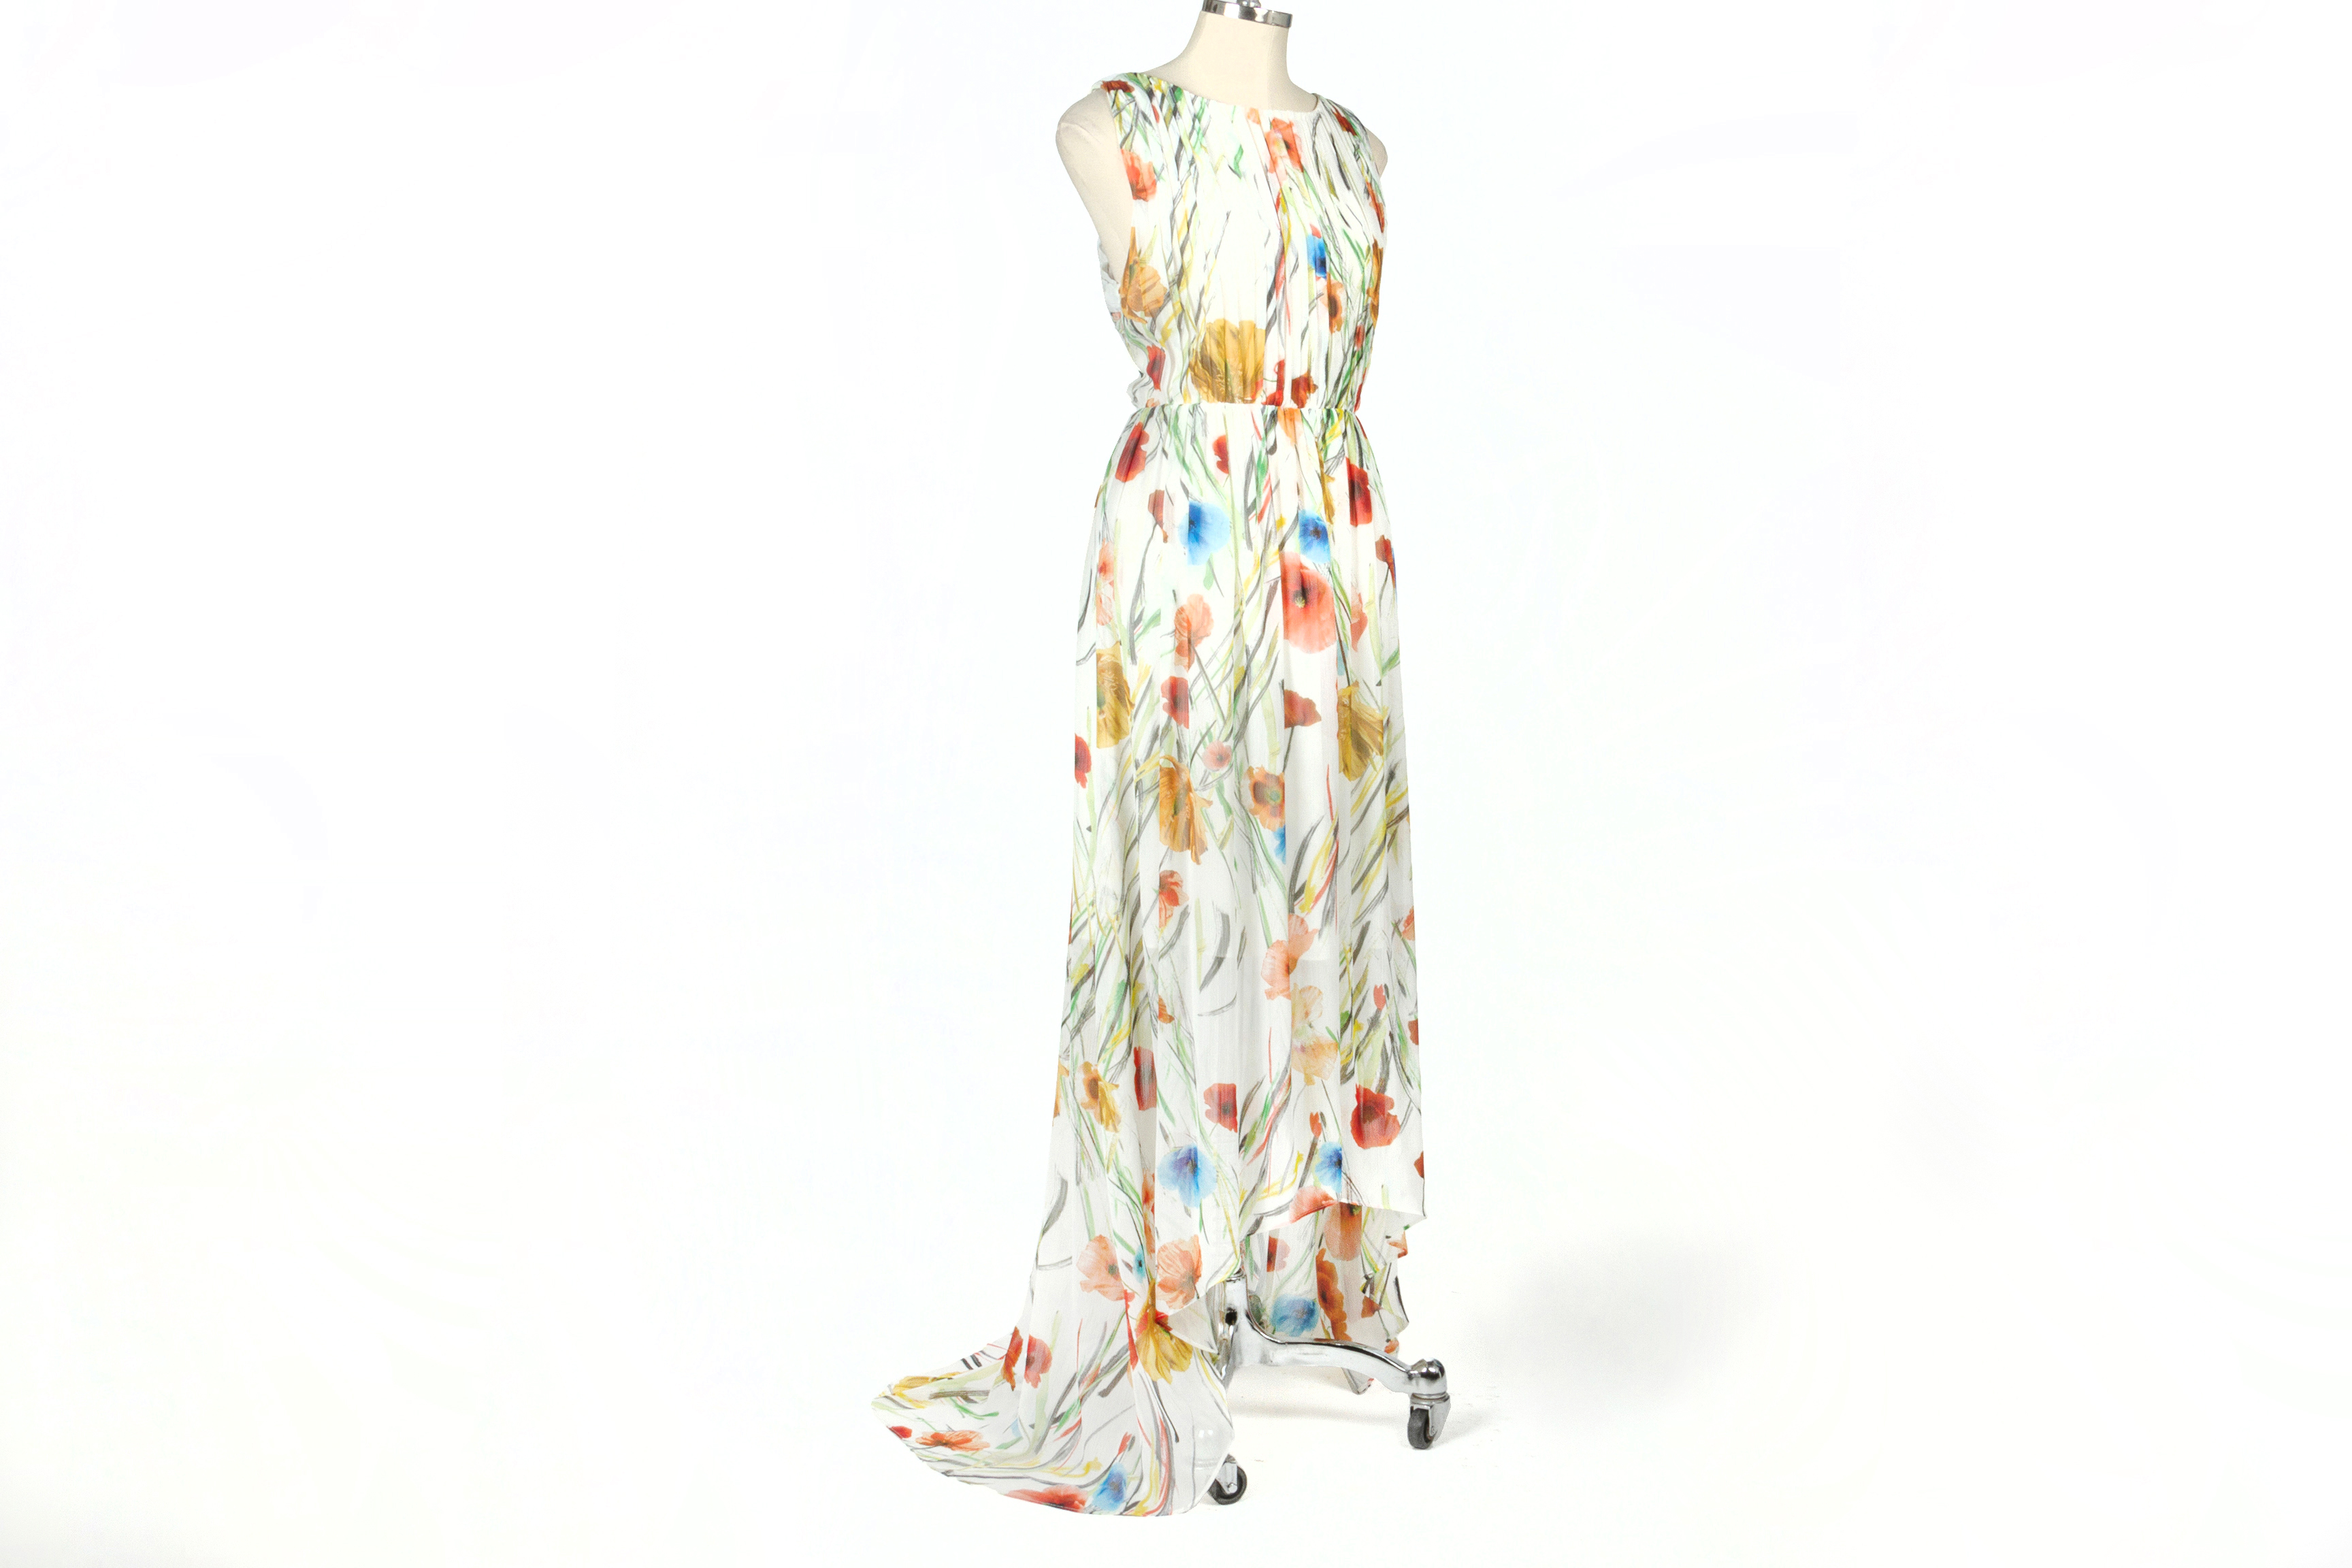 AN ALICE & OLIVIA MAXI DRESS - Image 2 of 4